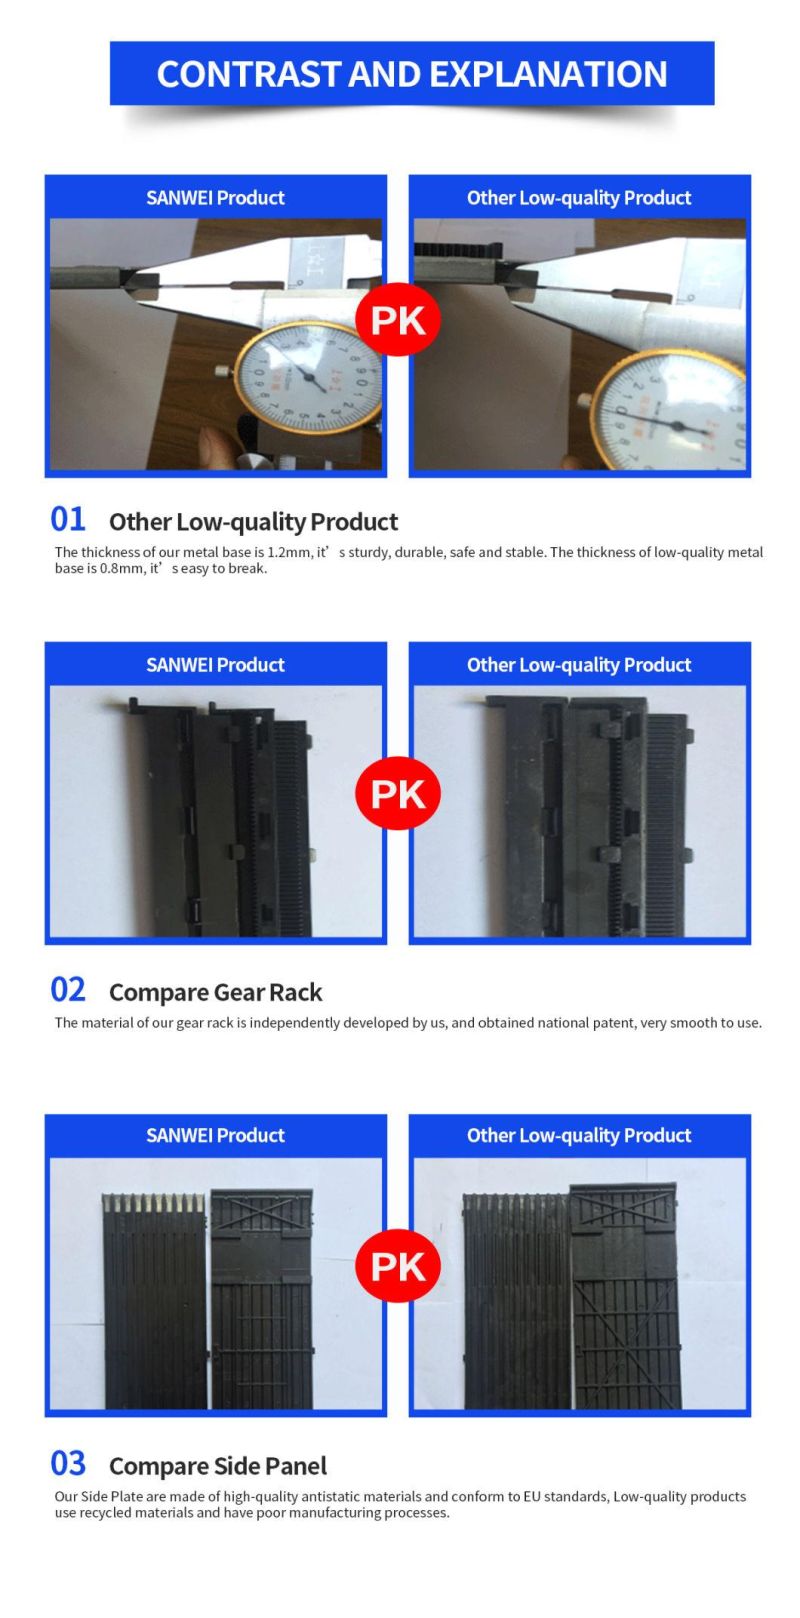 PCB Adjustable Circulation Magazine Storage Rack